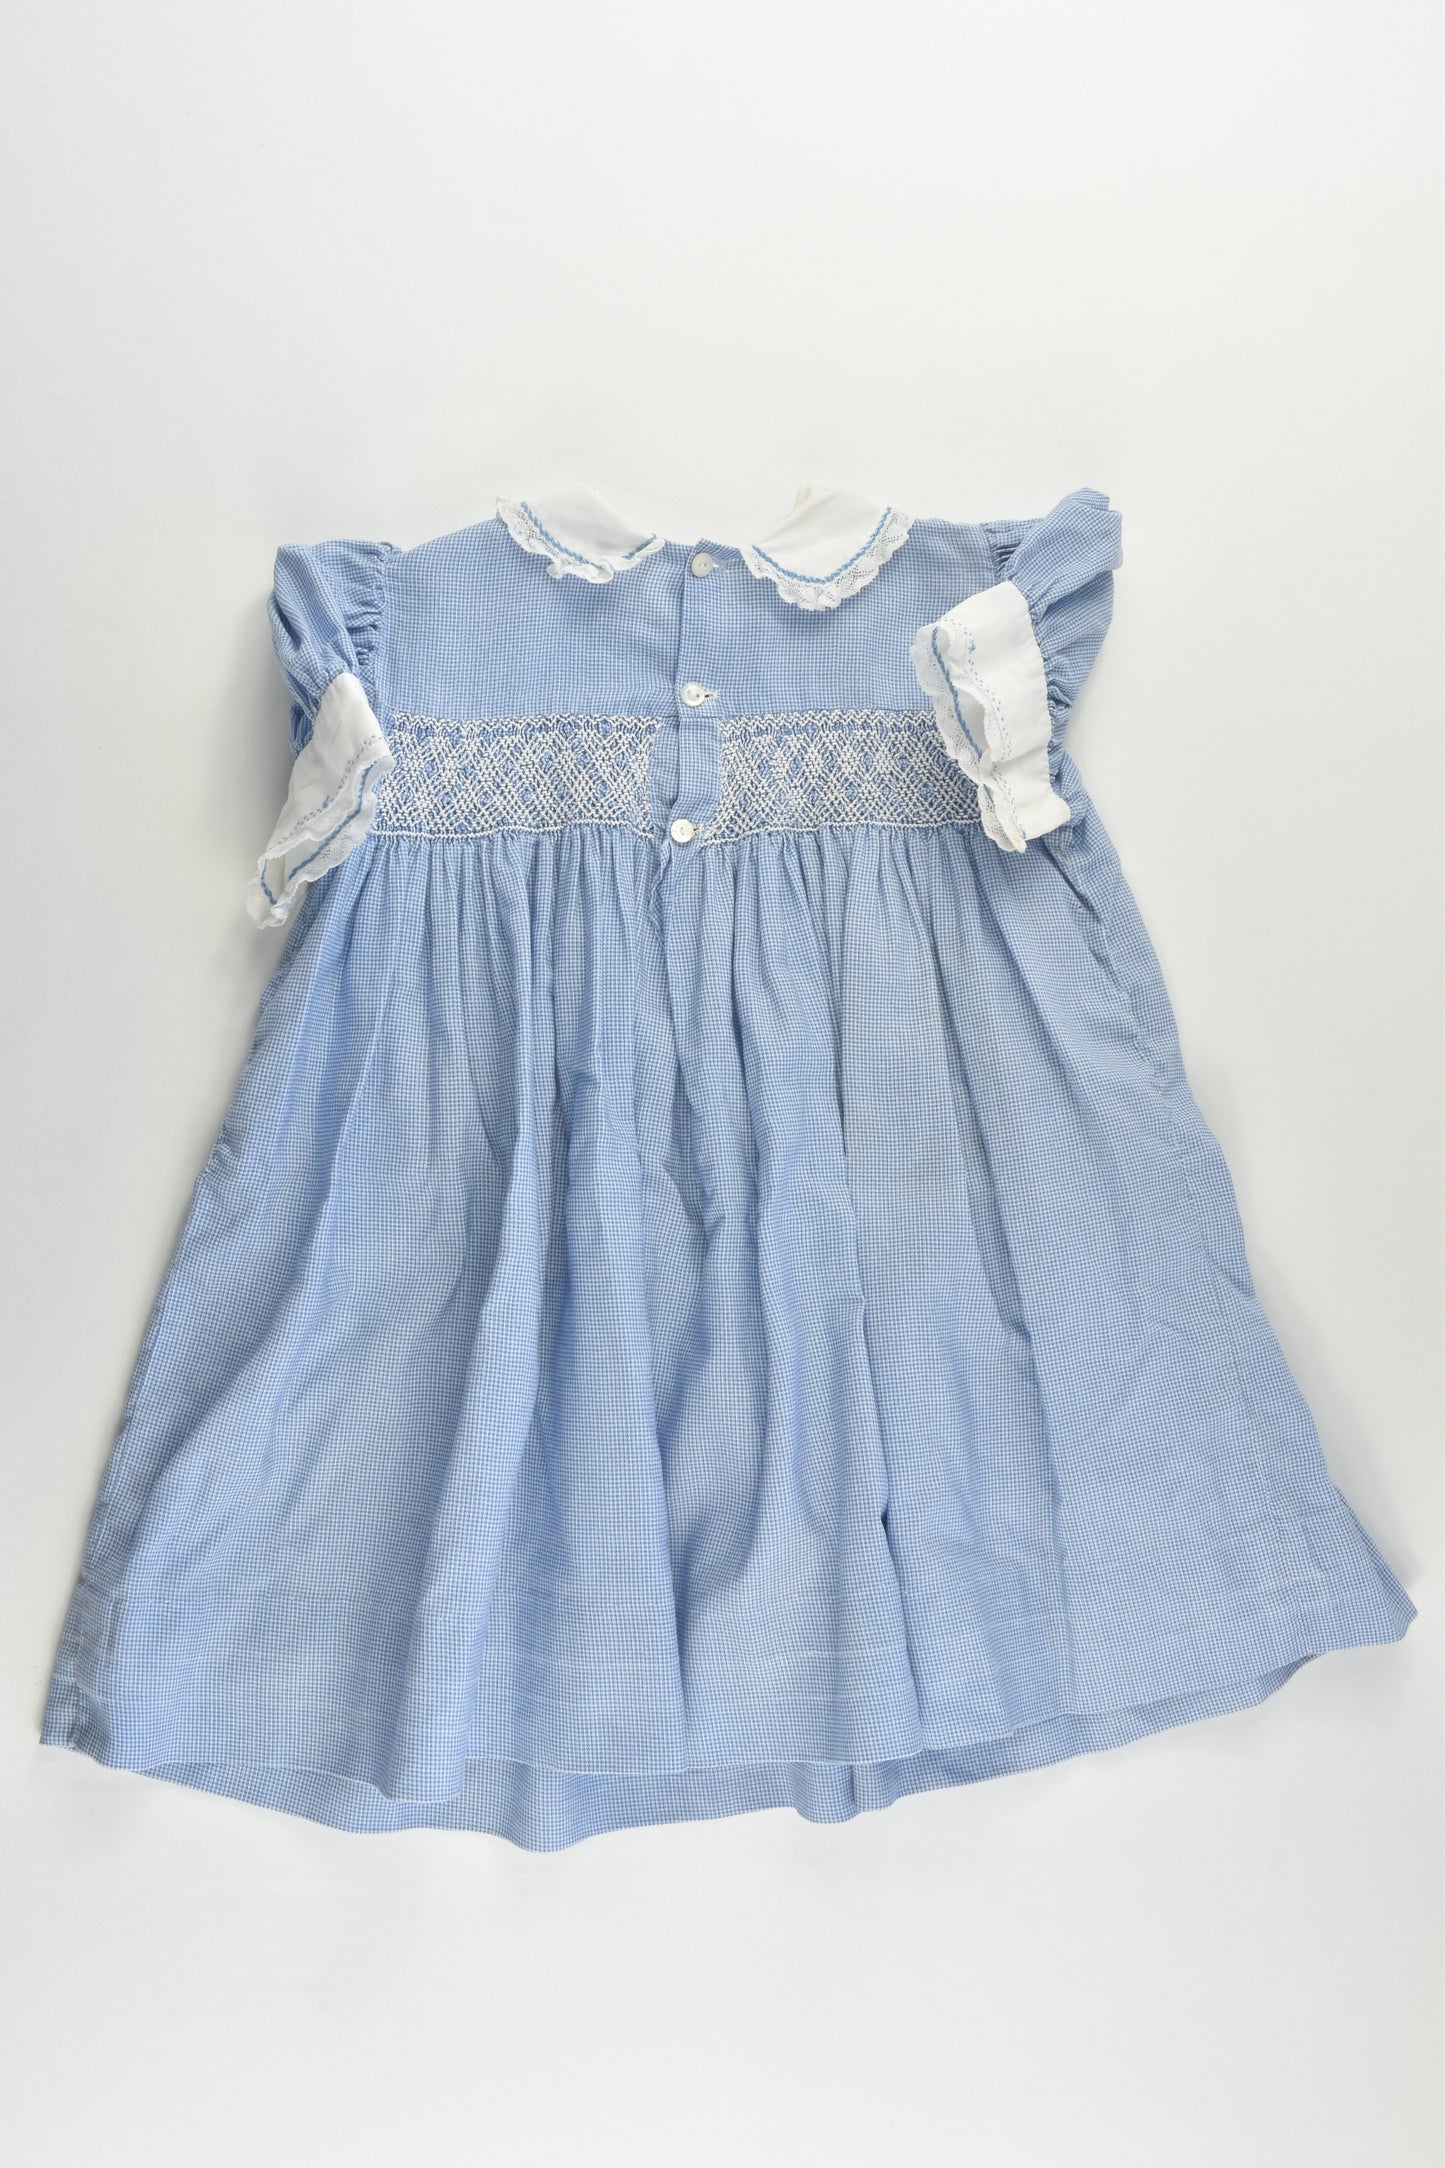 Handmade Size approx 0-1 Vintage Smocked Dress